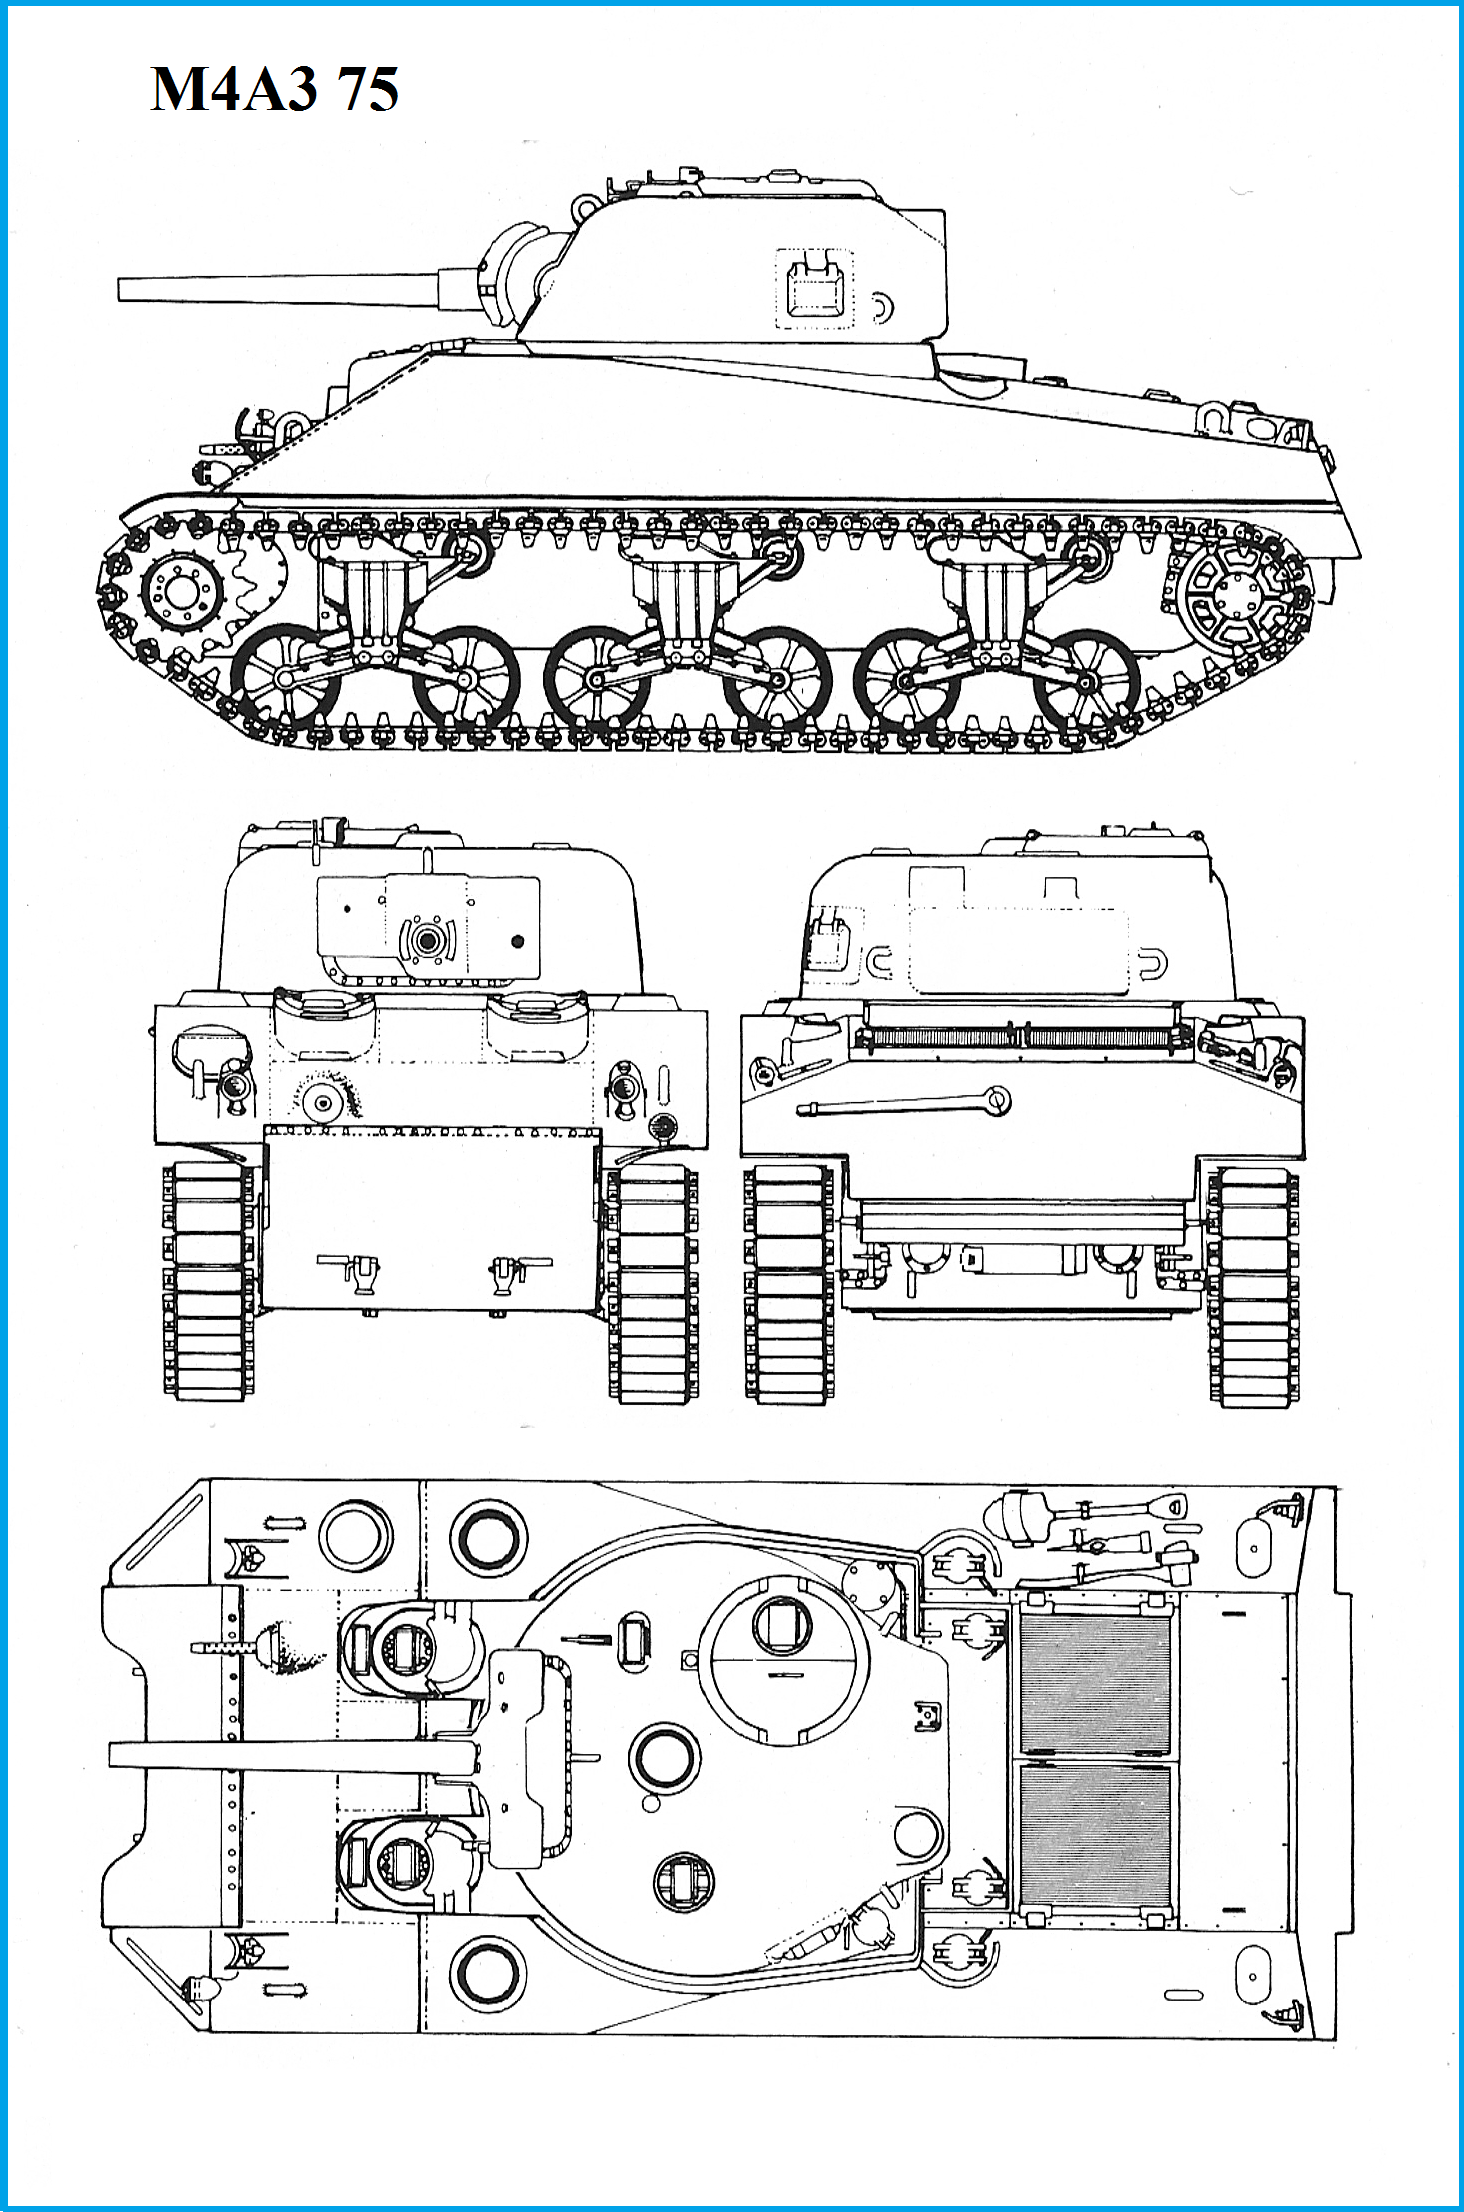 The Sherman M4A3 Medium Tank.